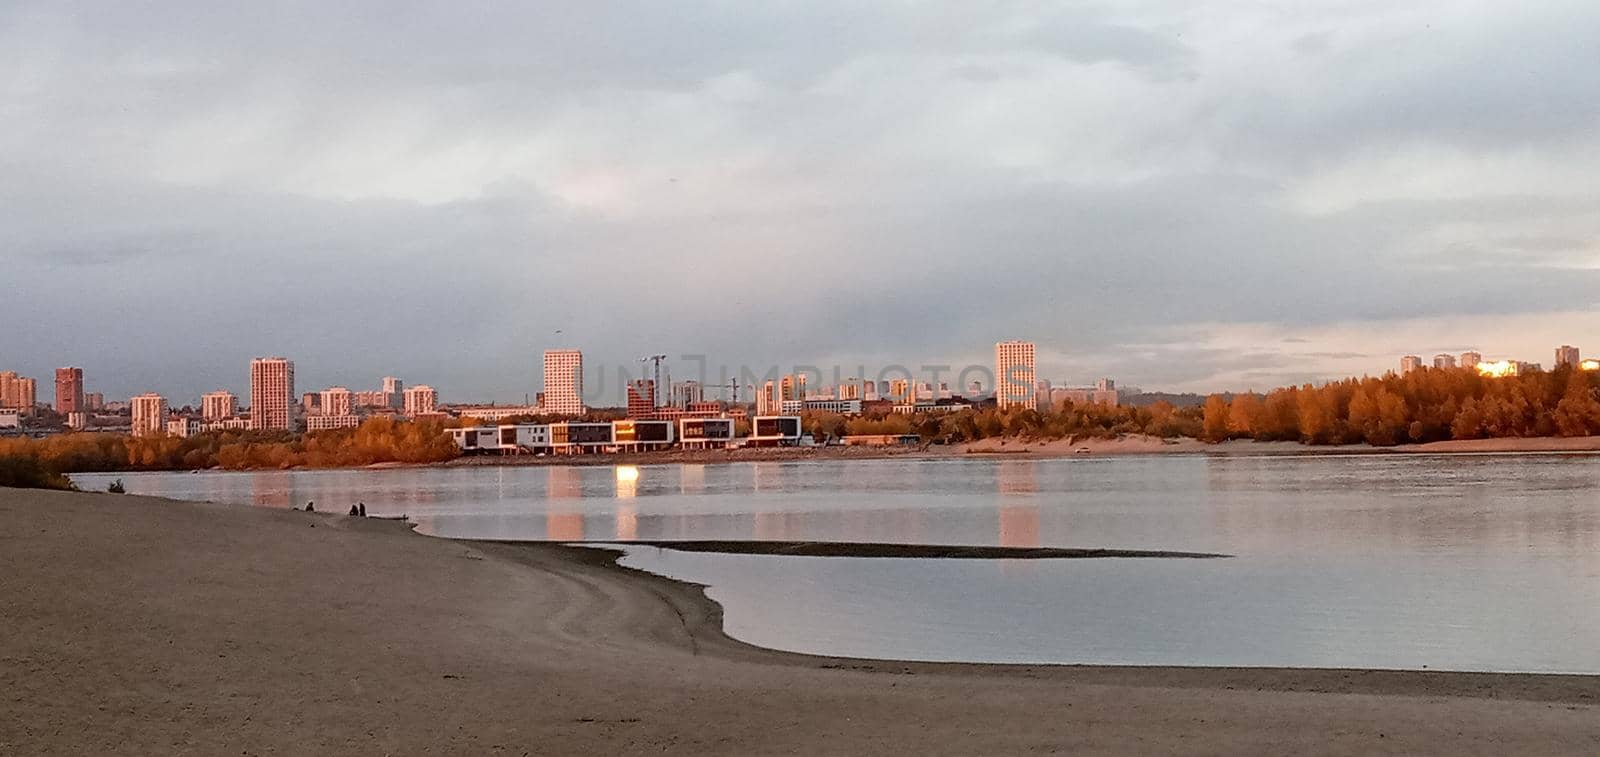  Panorama of Novosibirsk on the Ob river.The capital of Siberia. Novosibirsk, Siberia, Russia. by Rina_Dozornaya